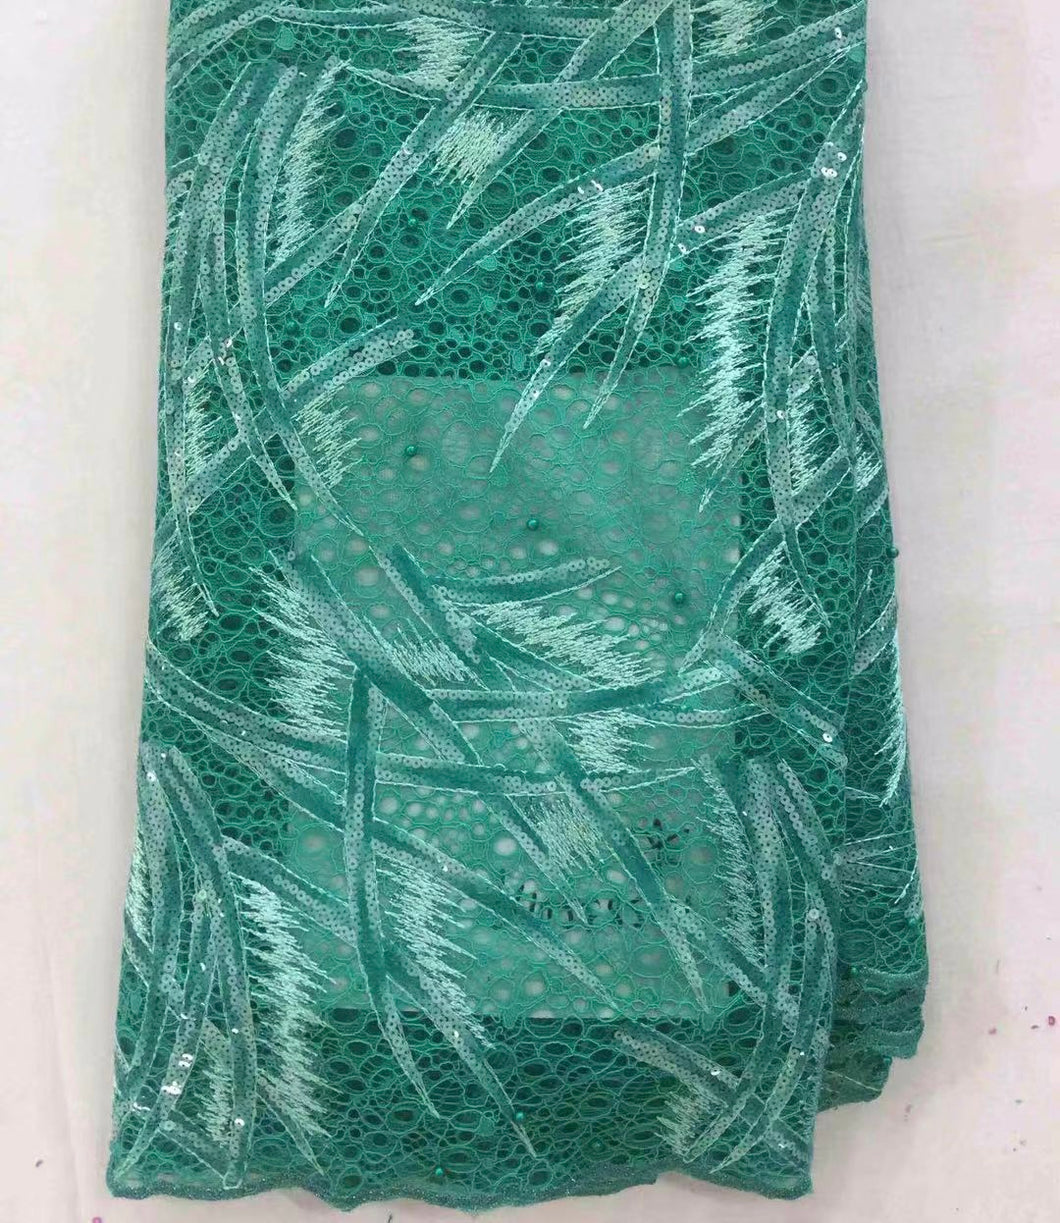 Aqua Green French Lace - 5 Yards